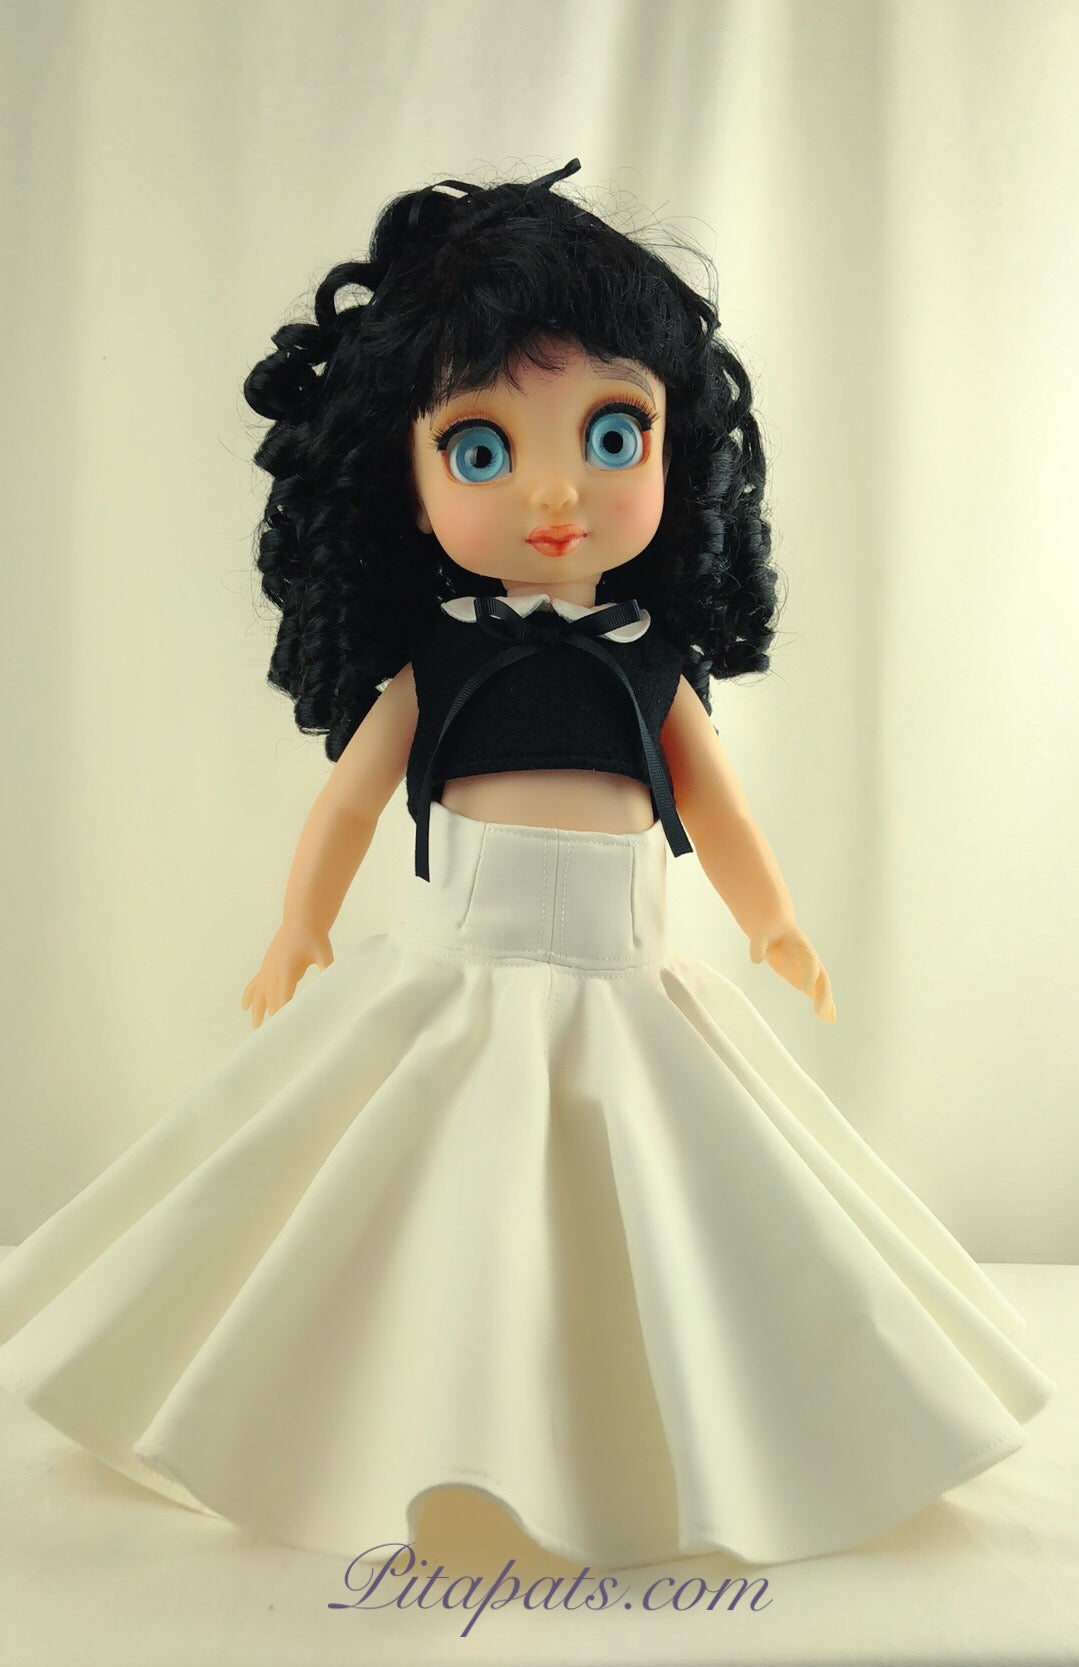 doll style dress